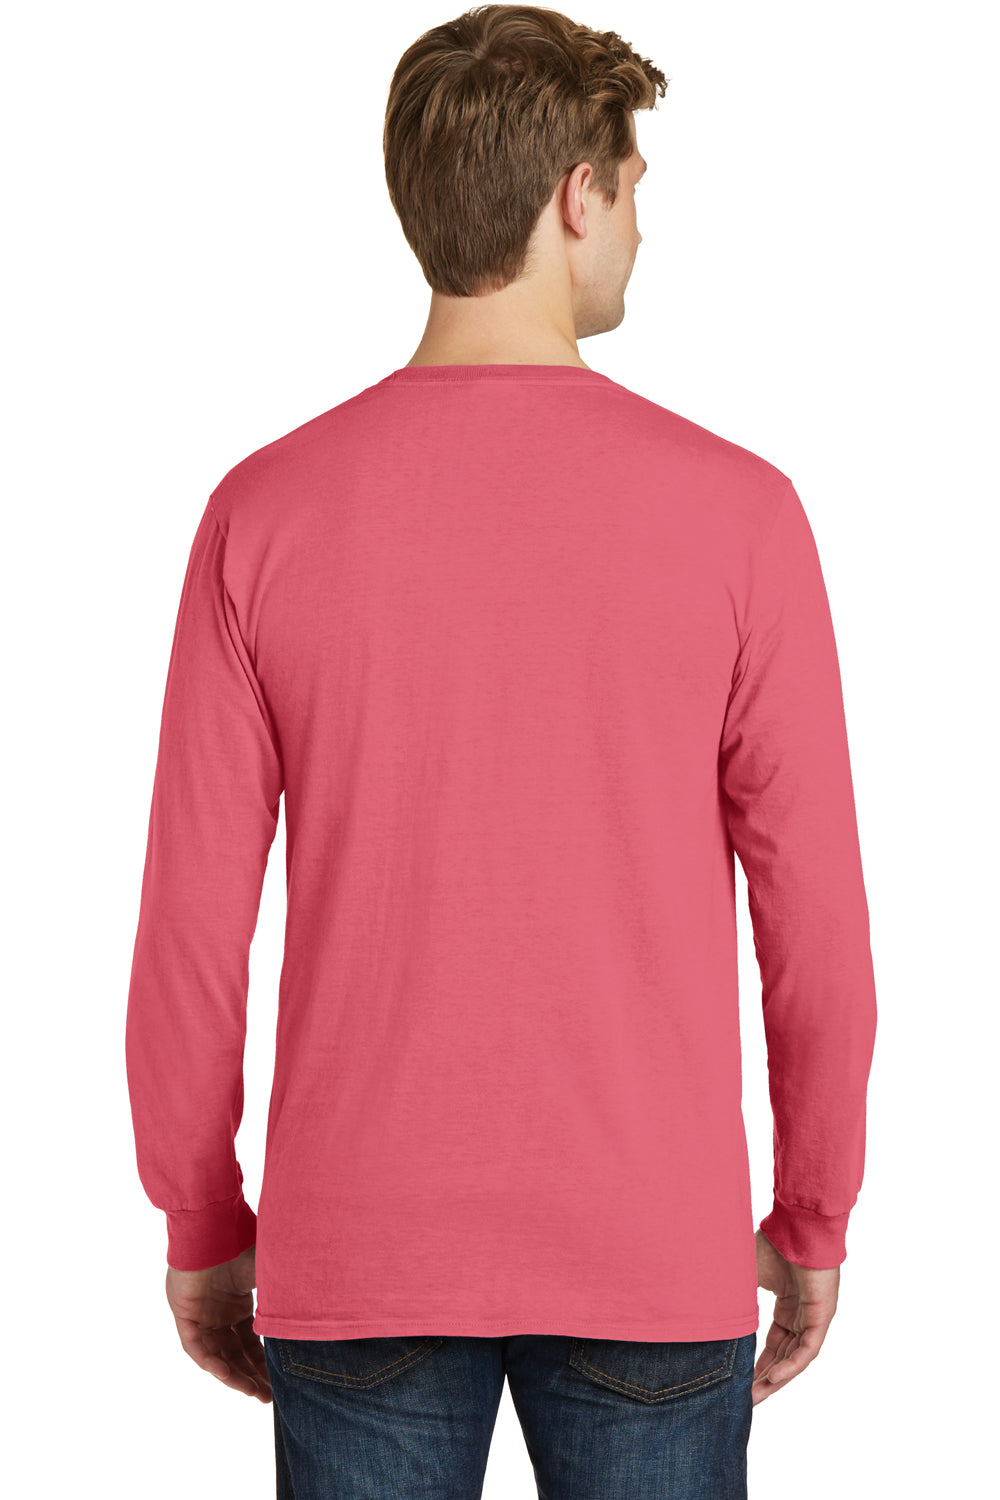 Port & Company PC099LS Mens Beach Wash Long Sleeve Crewneck T-Shirt Fruit Punch Pink Back